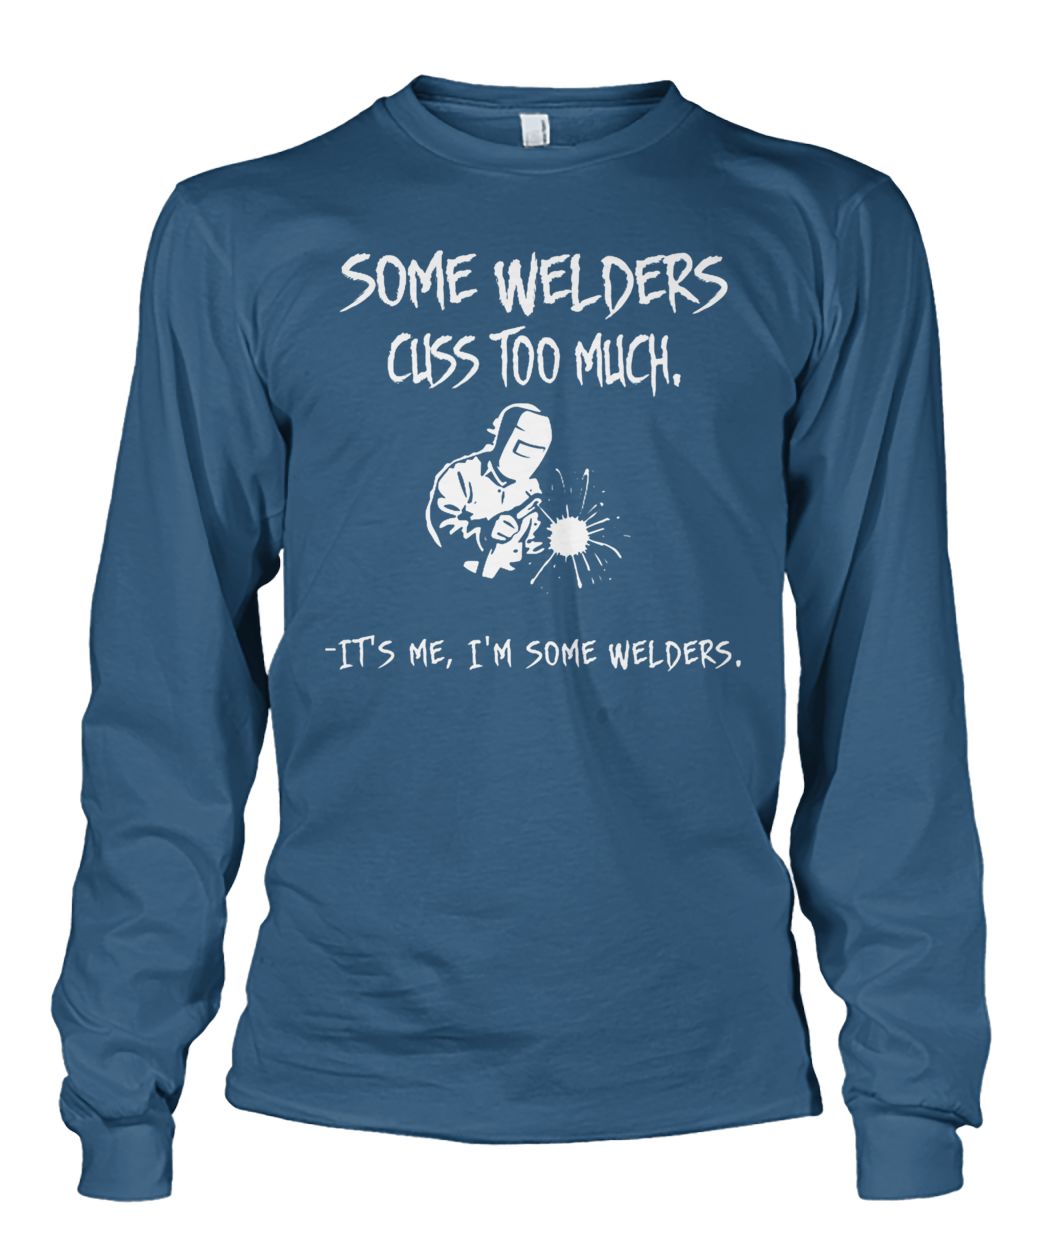 Some welders cuss too much it's me I'm some welders unisex long sleeve